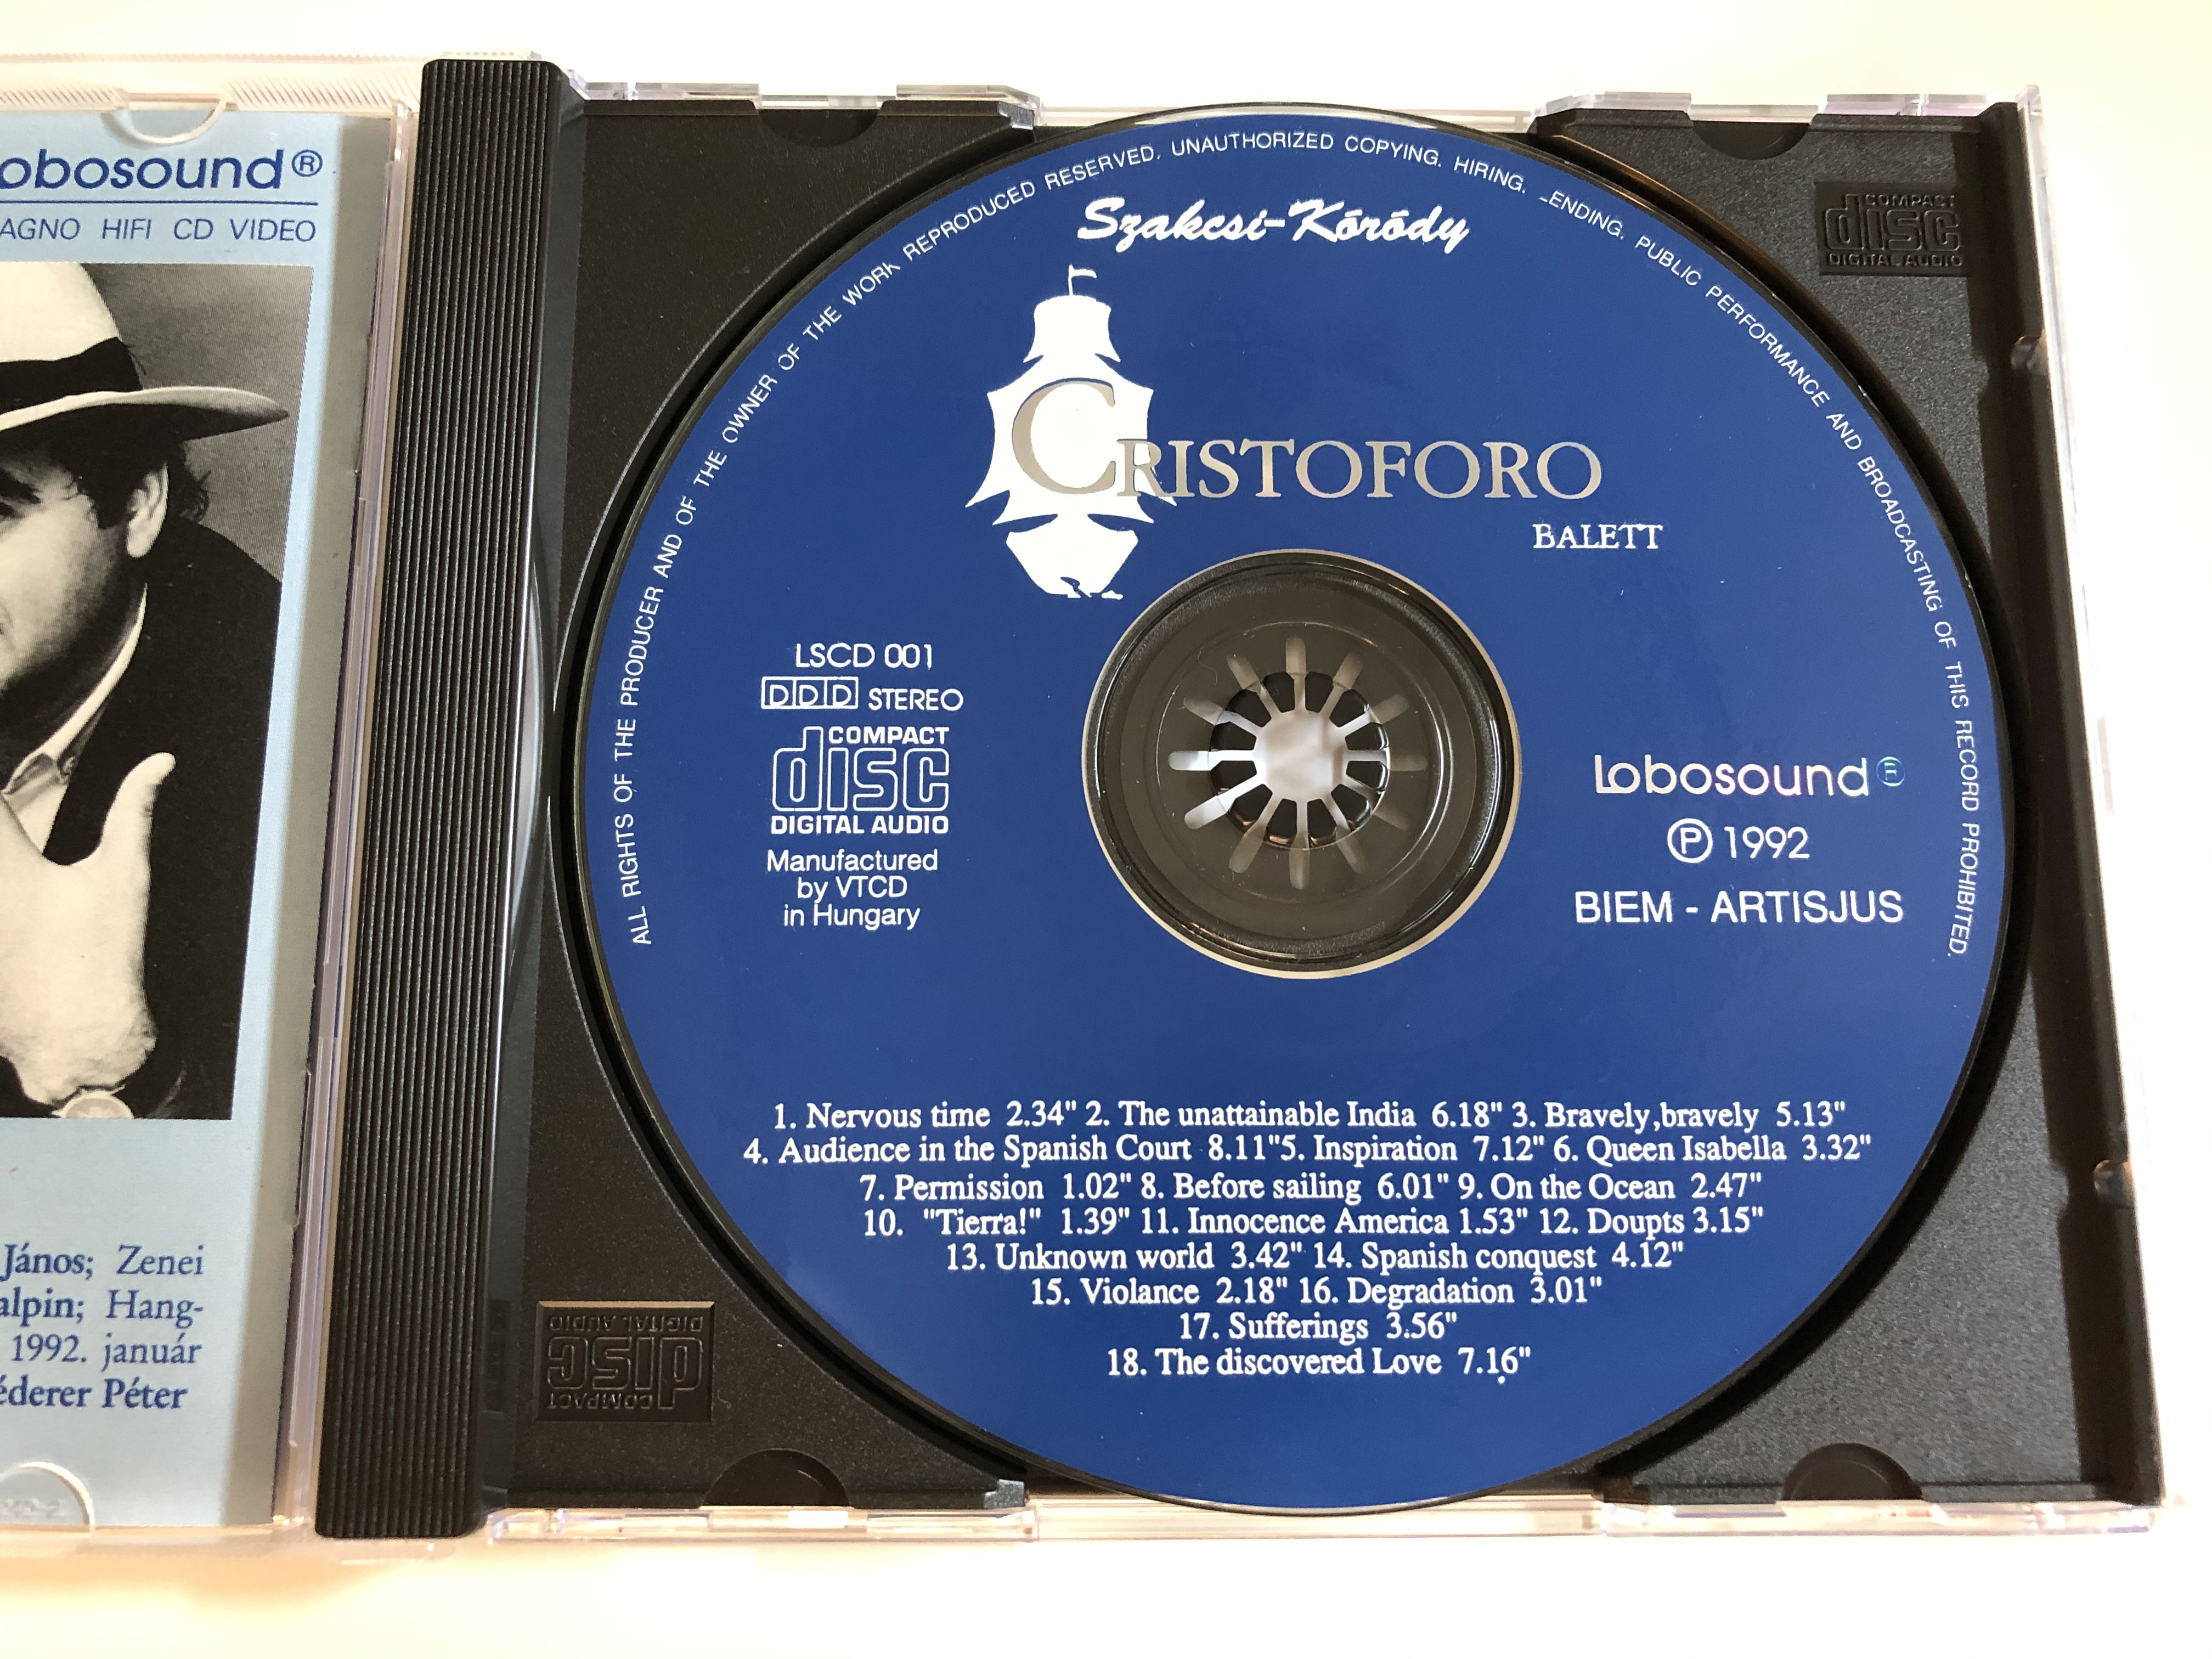 szakcsi-cristoforo-lobosound-audio-cd-1992-stereo-lscd-001-7-.jpg